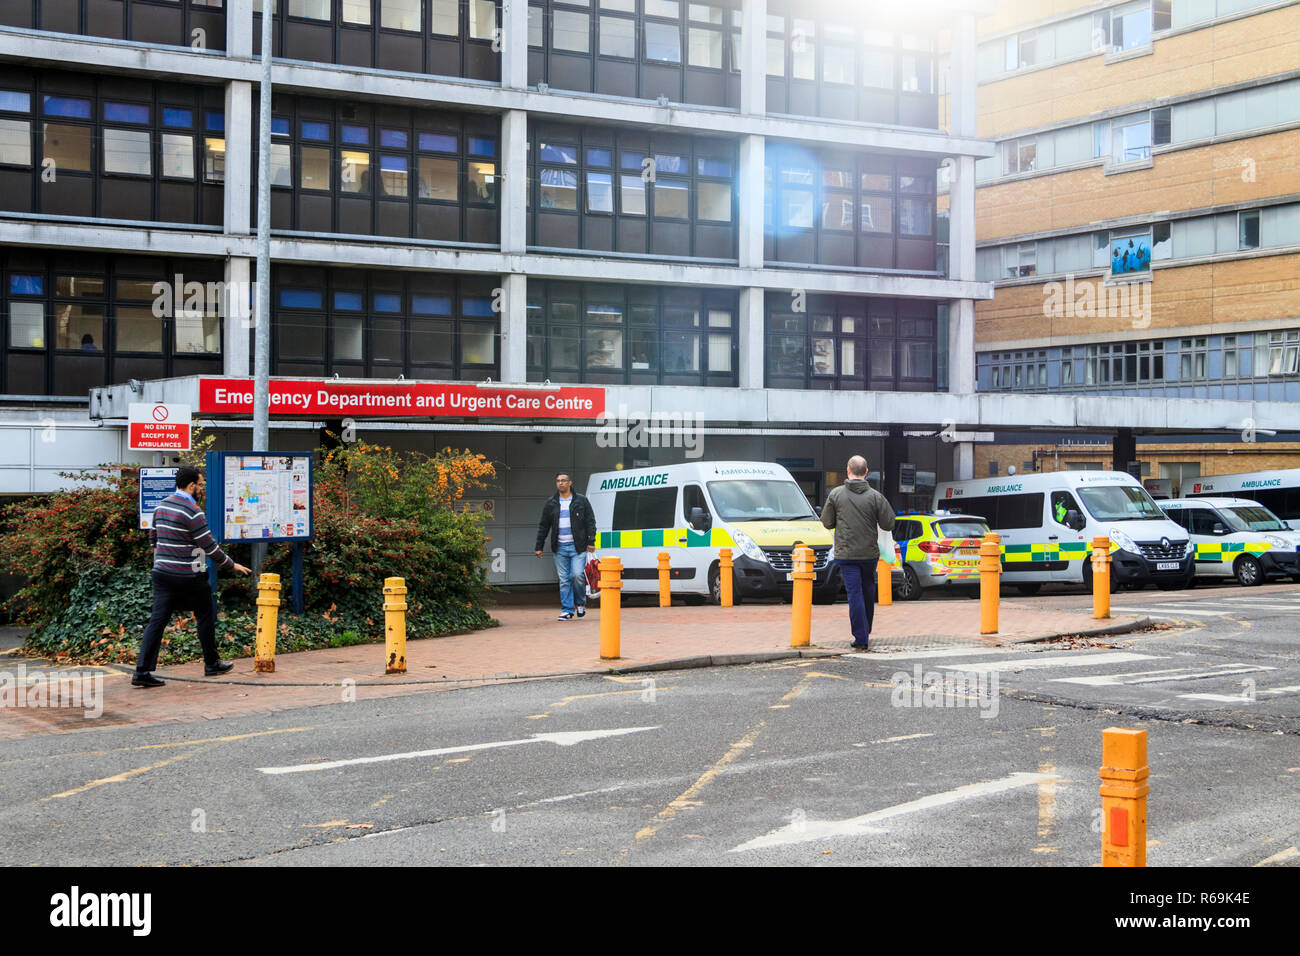 Emergency and Urgent Care departments  of the Whittington Hospital NHS trust on Highgate Hill, London, UK Stock Photo